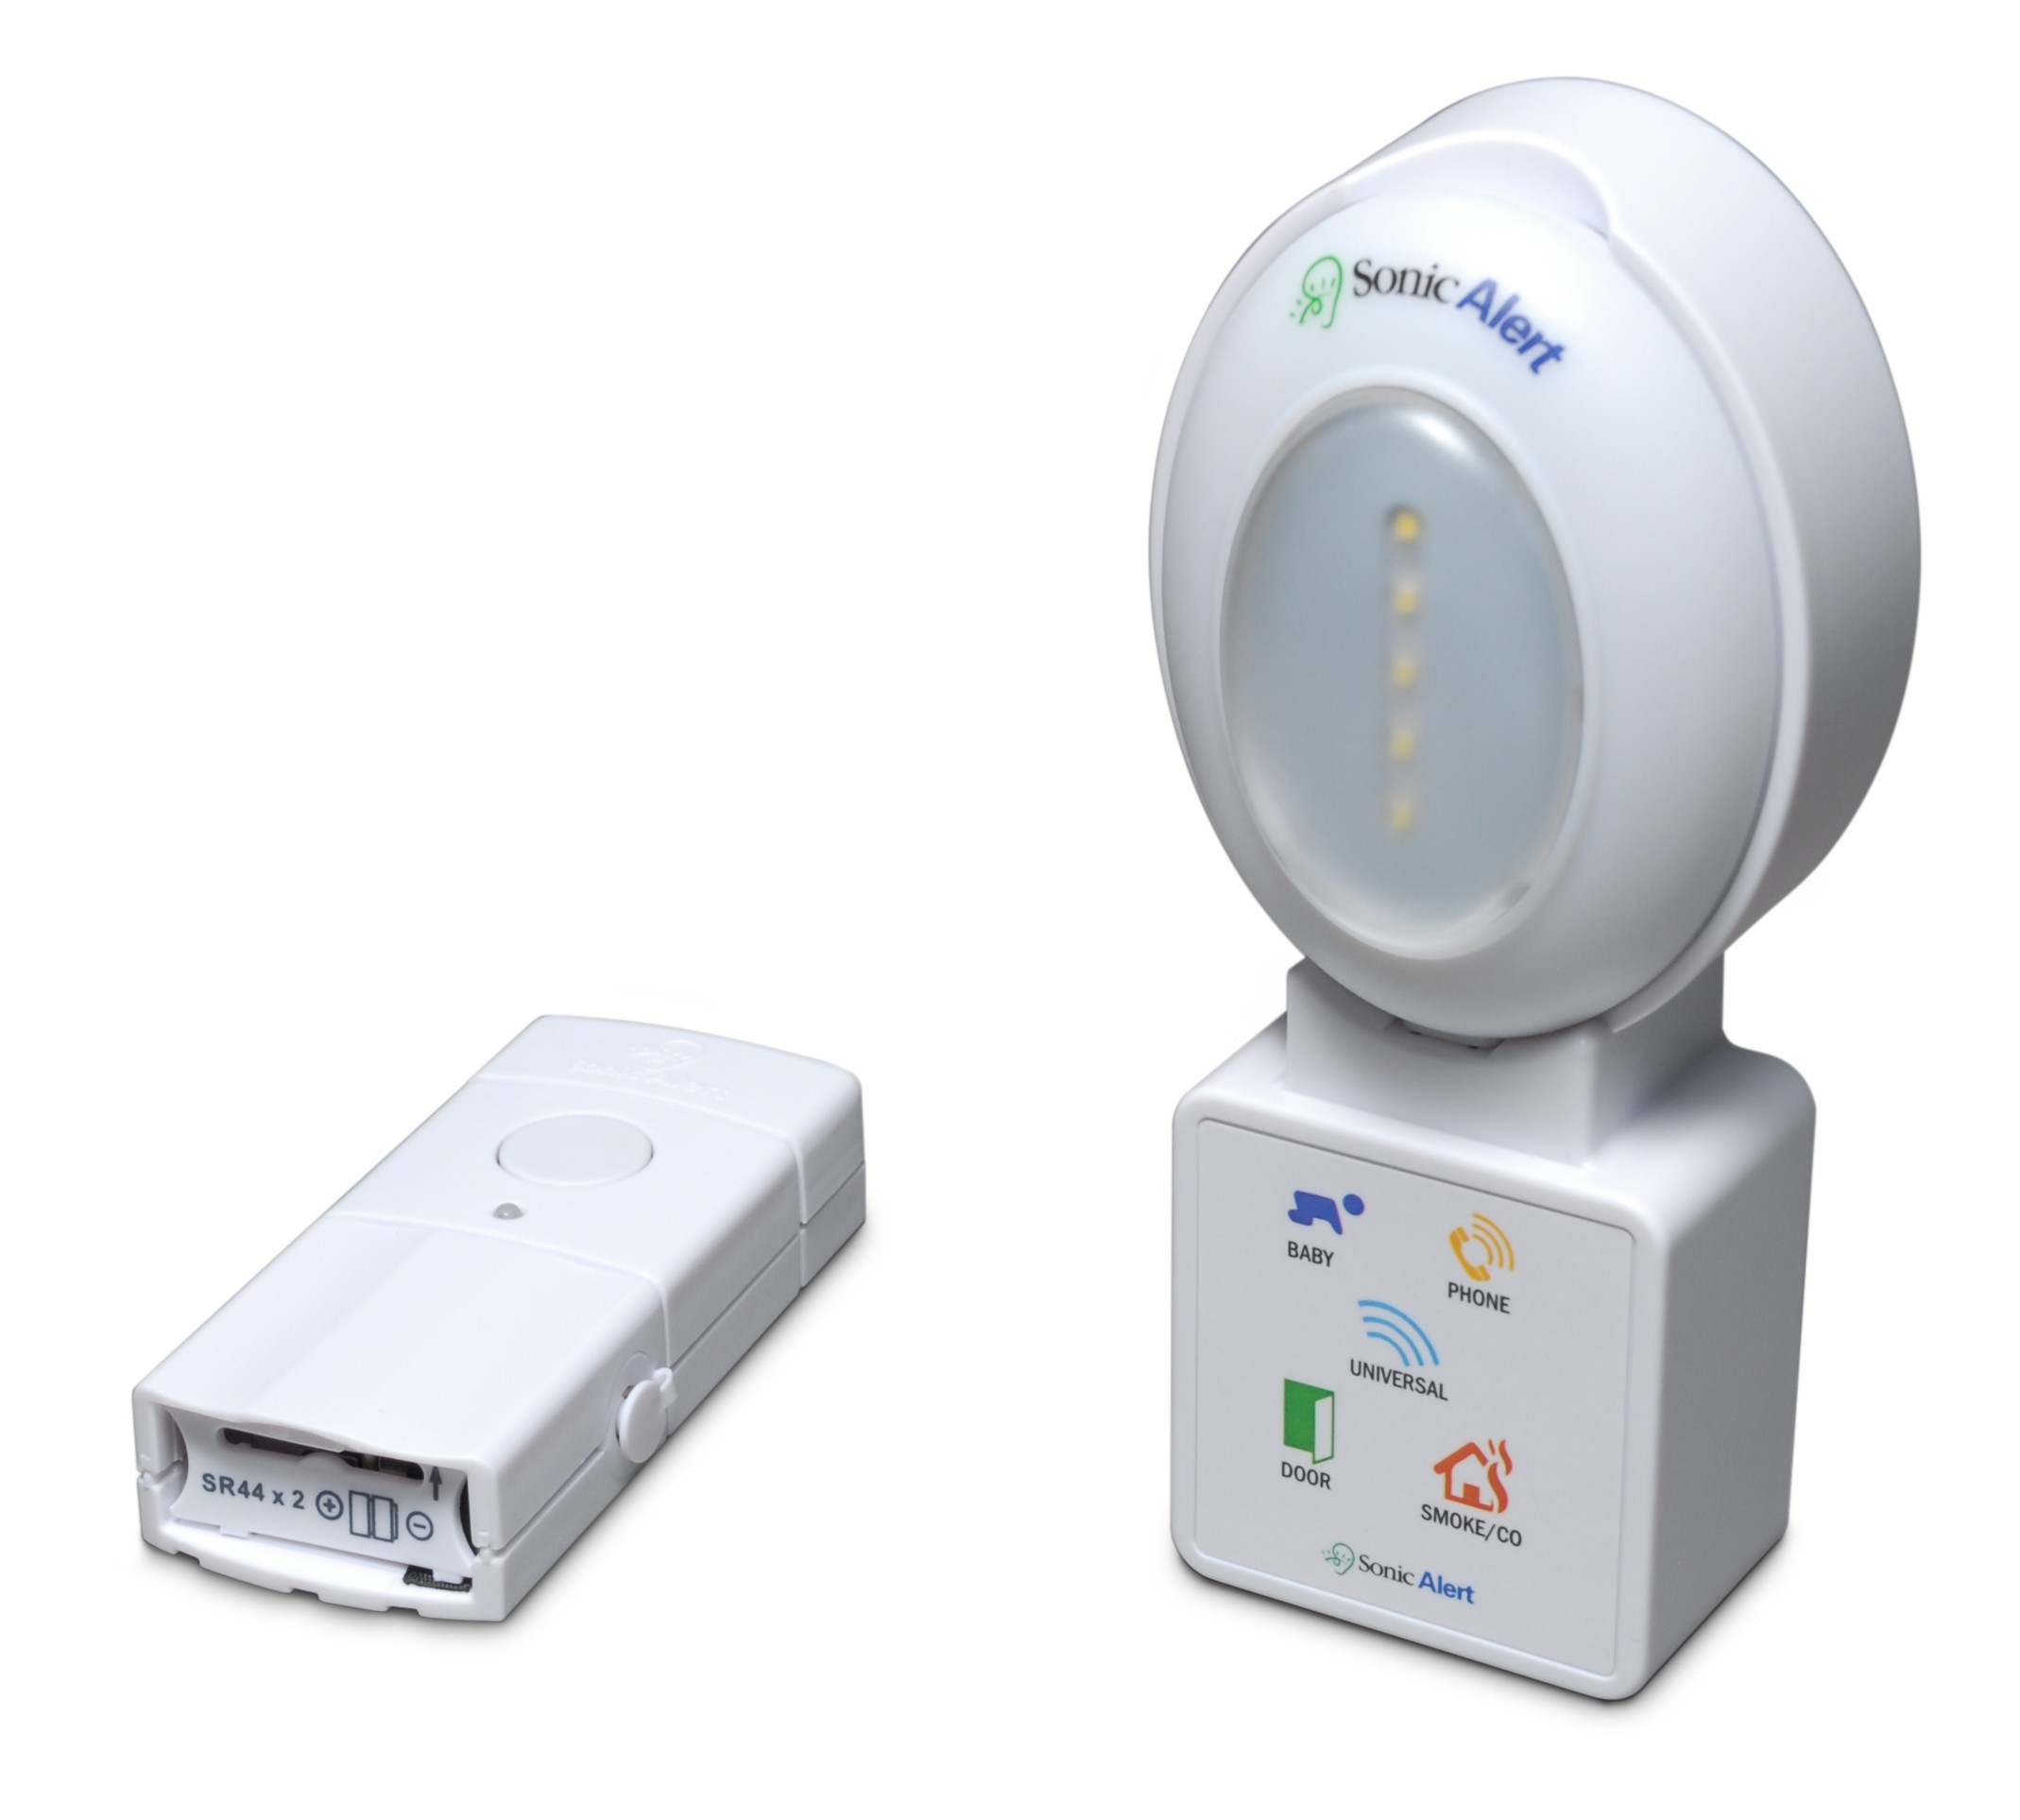 Sonic Alert HomeAware Blink LED Receiver with Doorbell